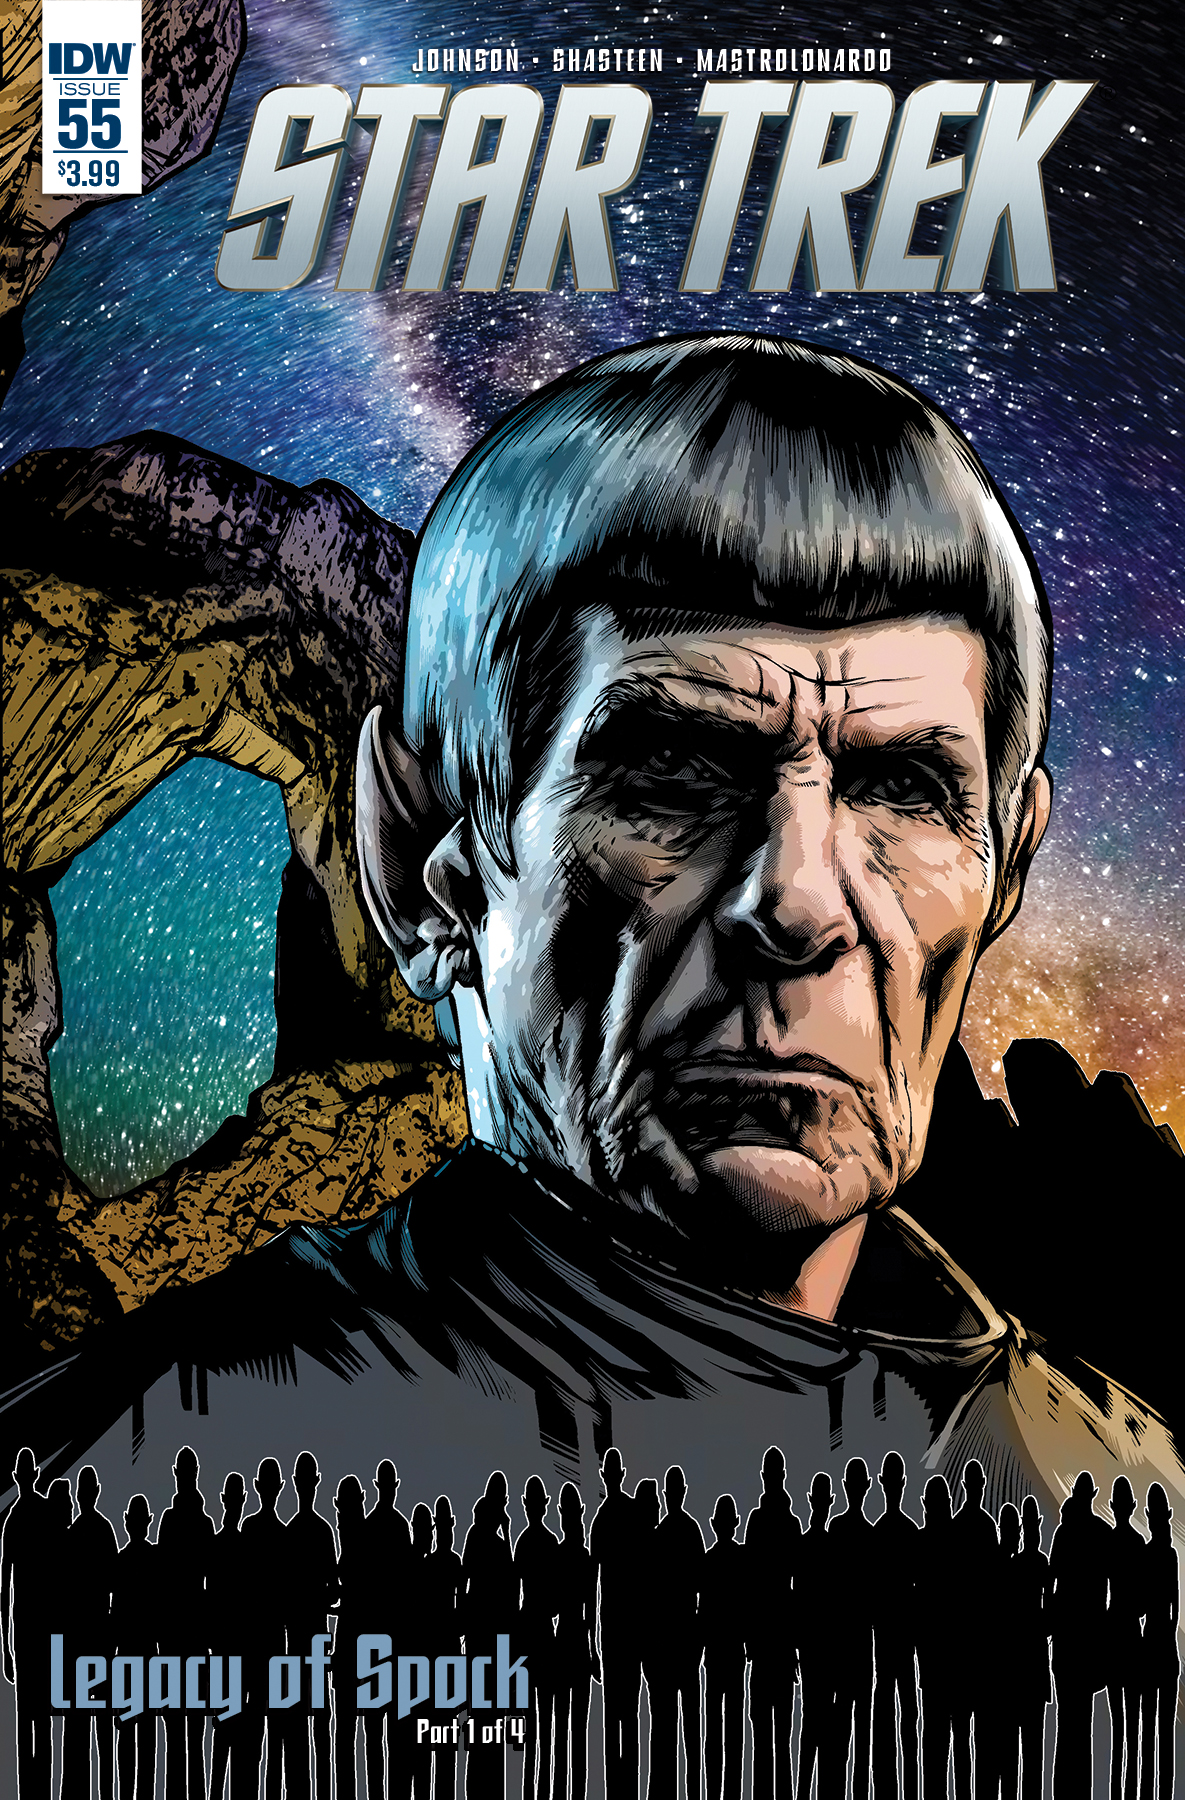 Star Trek #55 Legacy of Spock Part One Cover